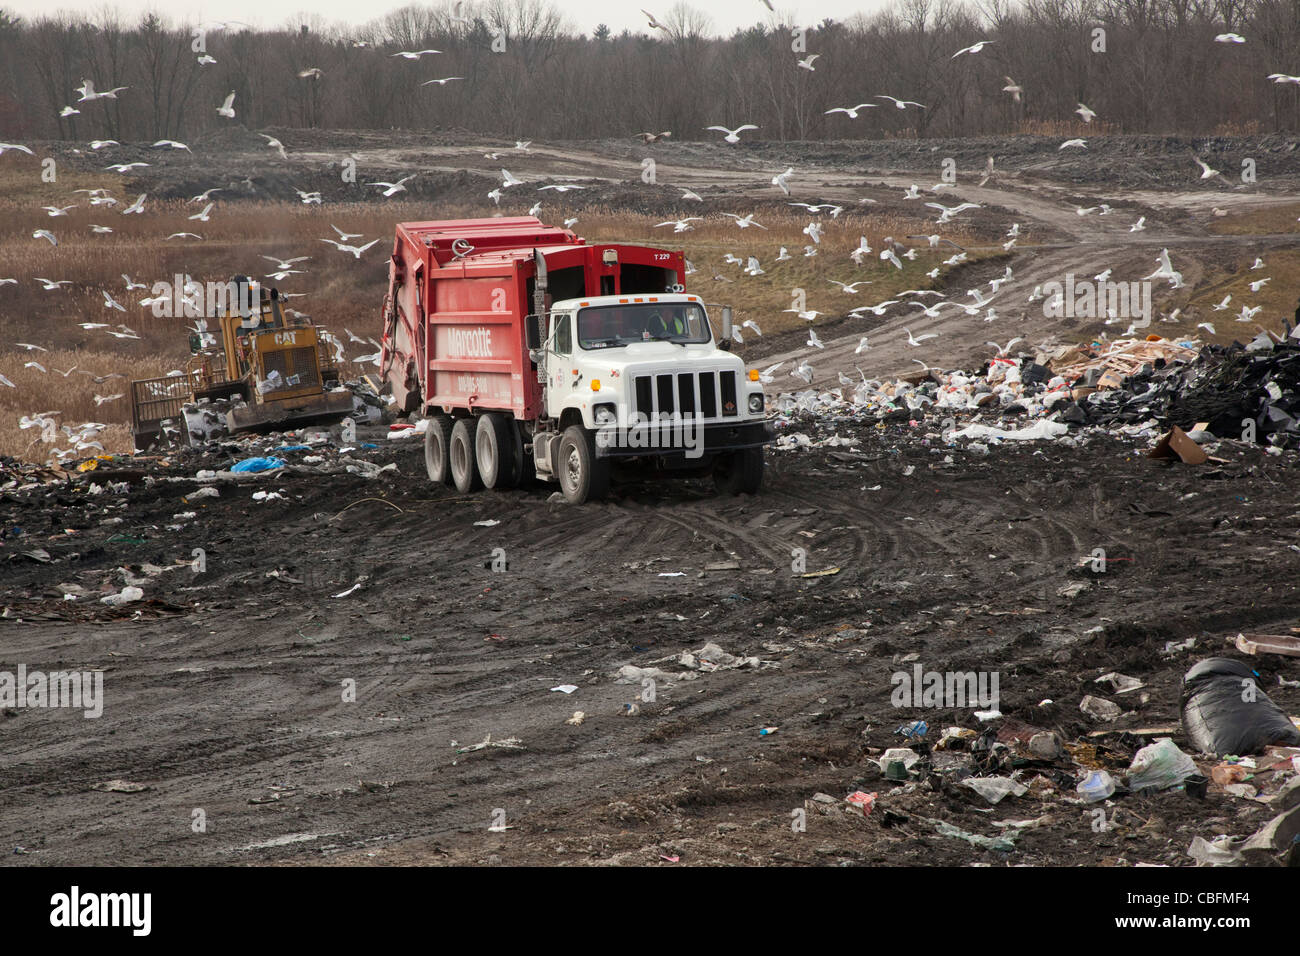 Smiths Creek, Michigan - Deponien ein LKW Müll im St. Clair County Smith Creek Deponie. Stockfoto